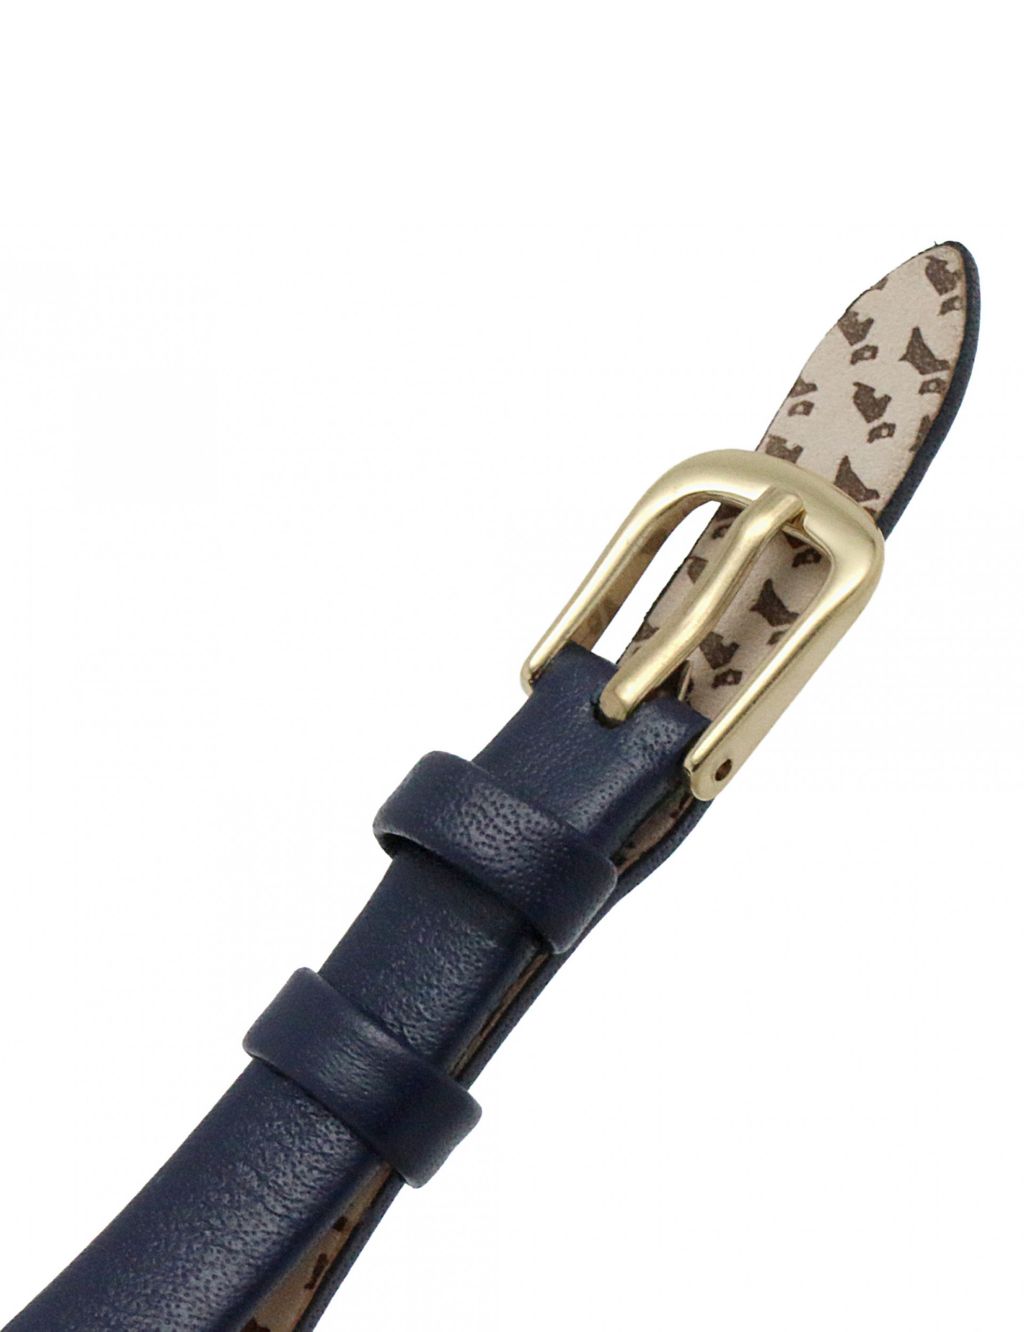 Radley Scottie Dog Black Leather Watch image 5